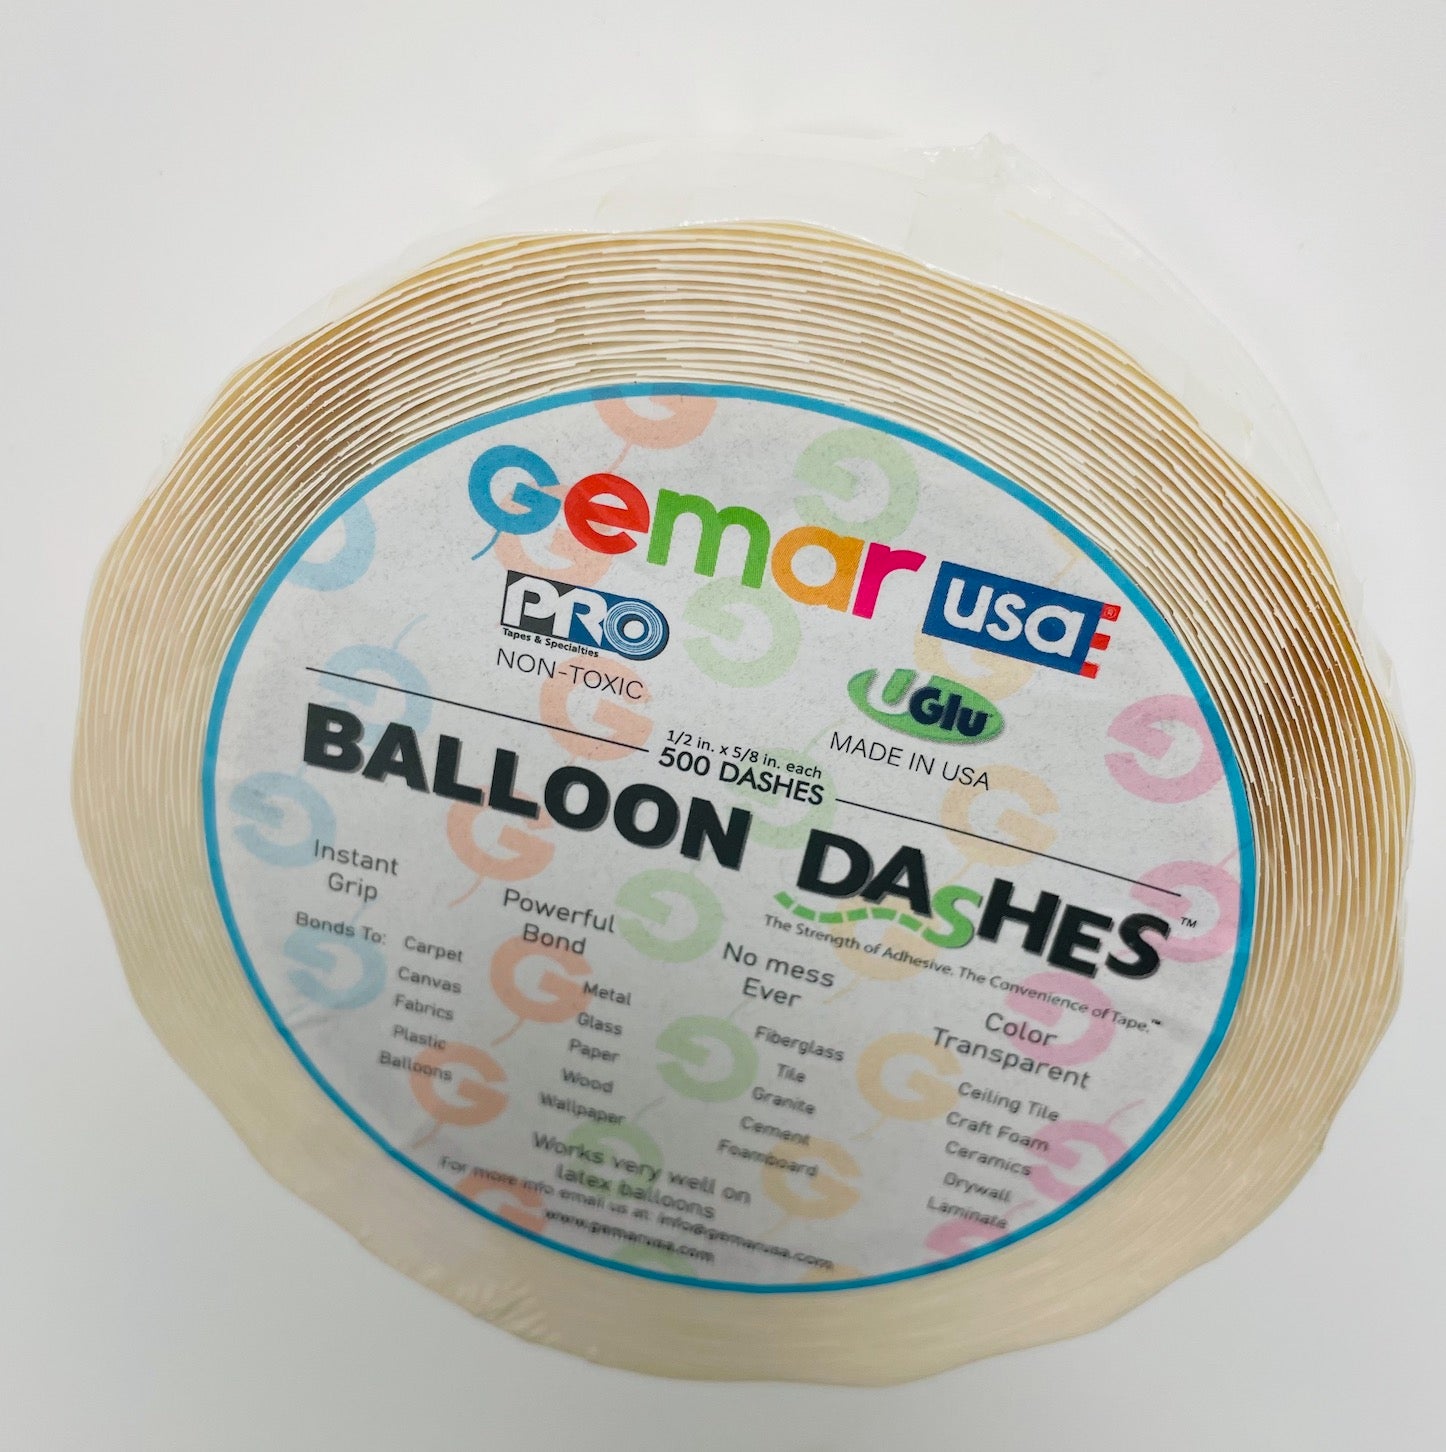 Uglu Dashes Pro 500 Units Per roll – Lift balloons